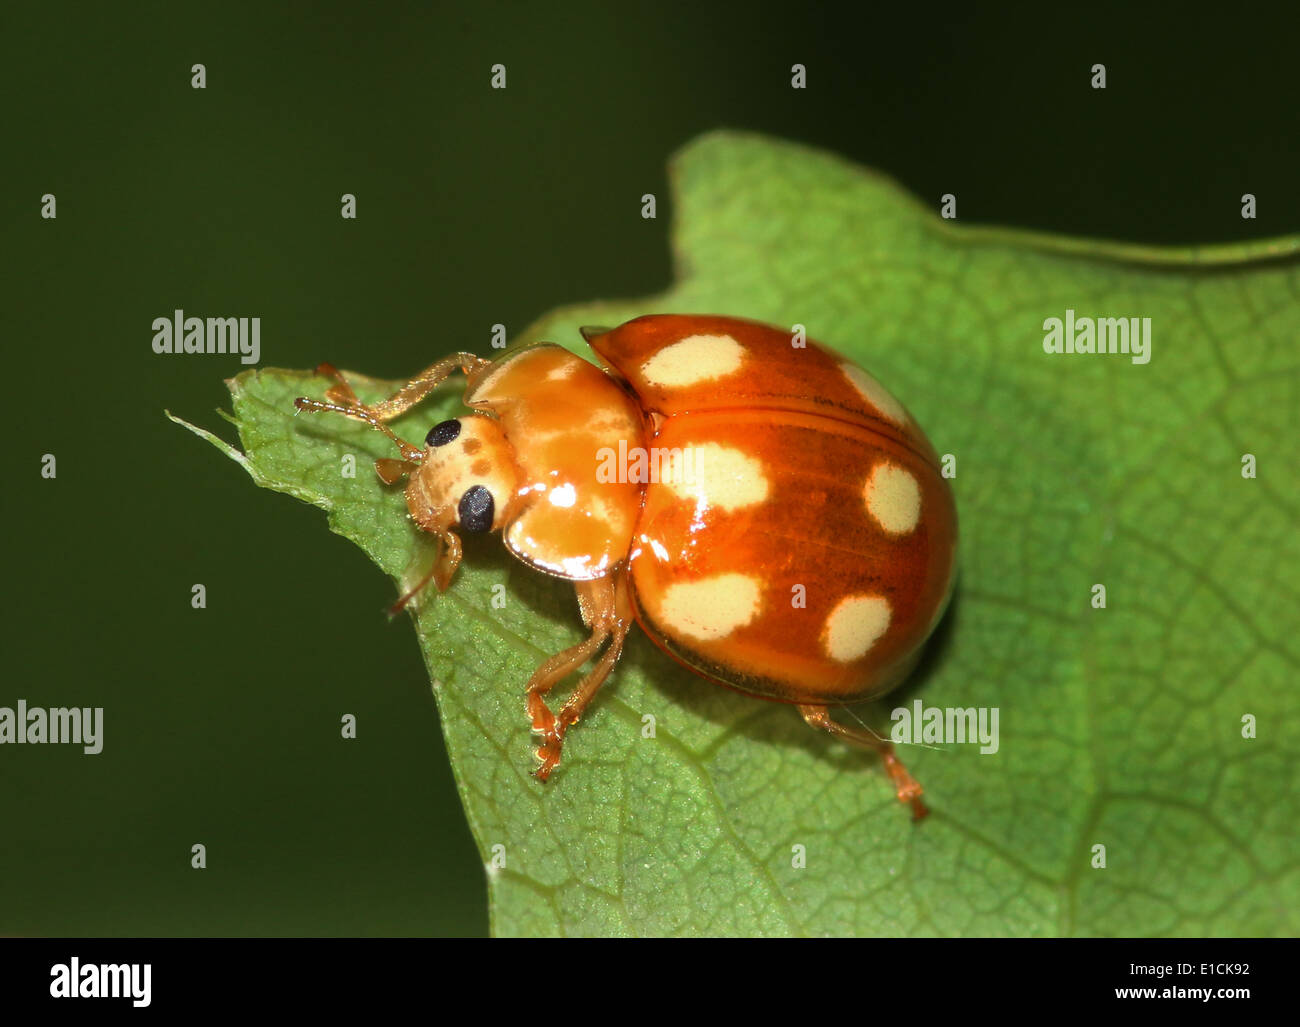 The minute orange 10 spot ladybird / ladybug (Calvia decemguttata) Stock Photo